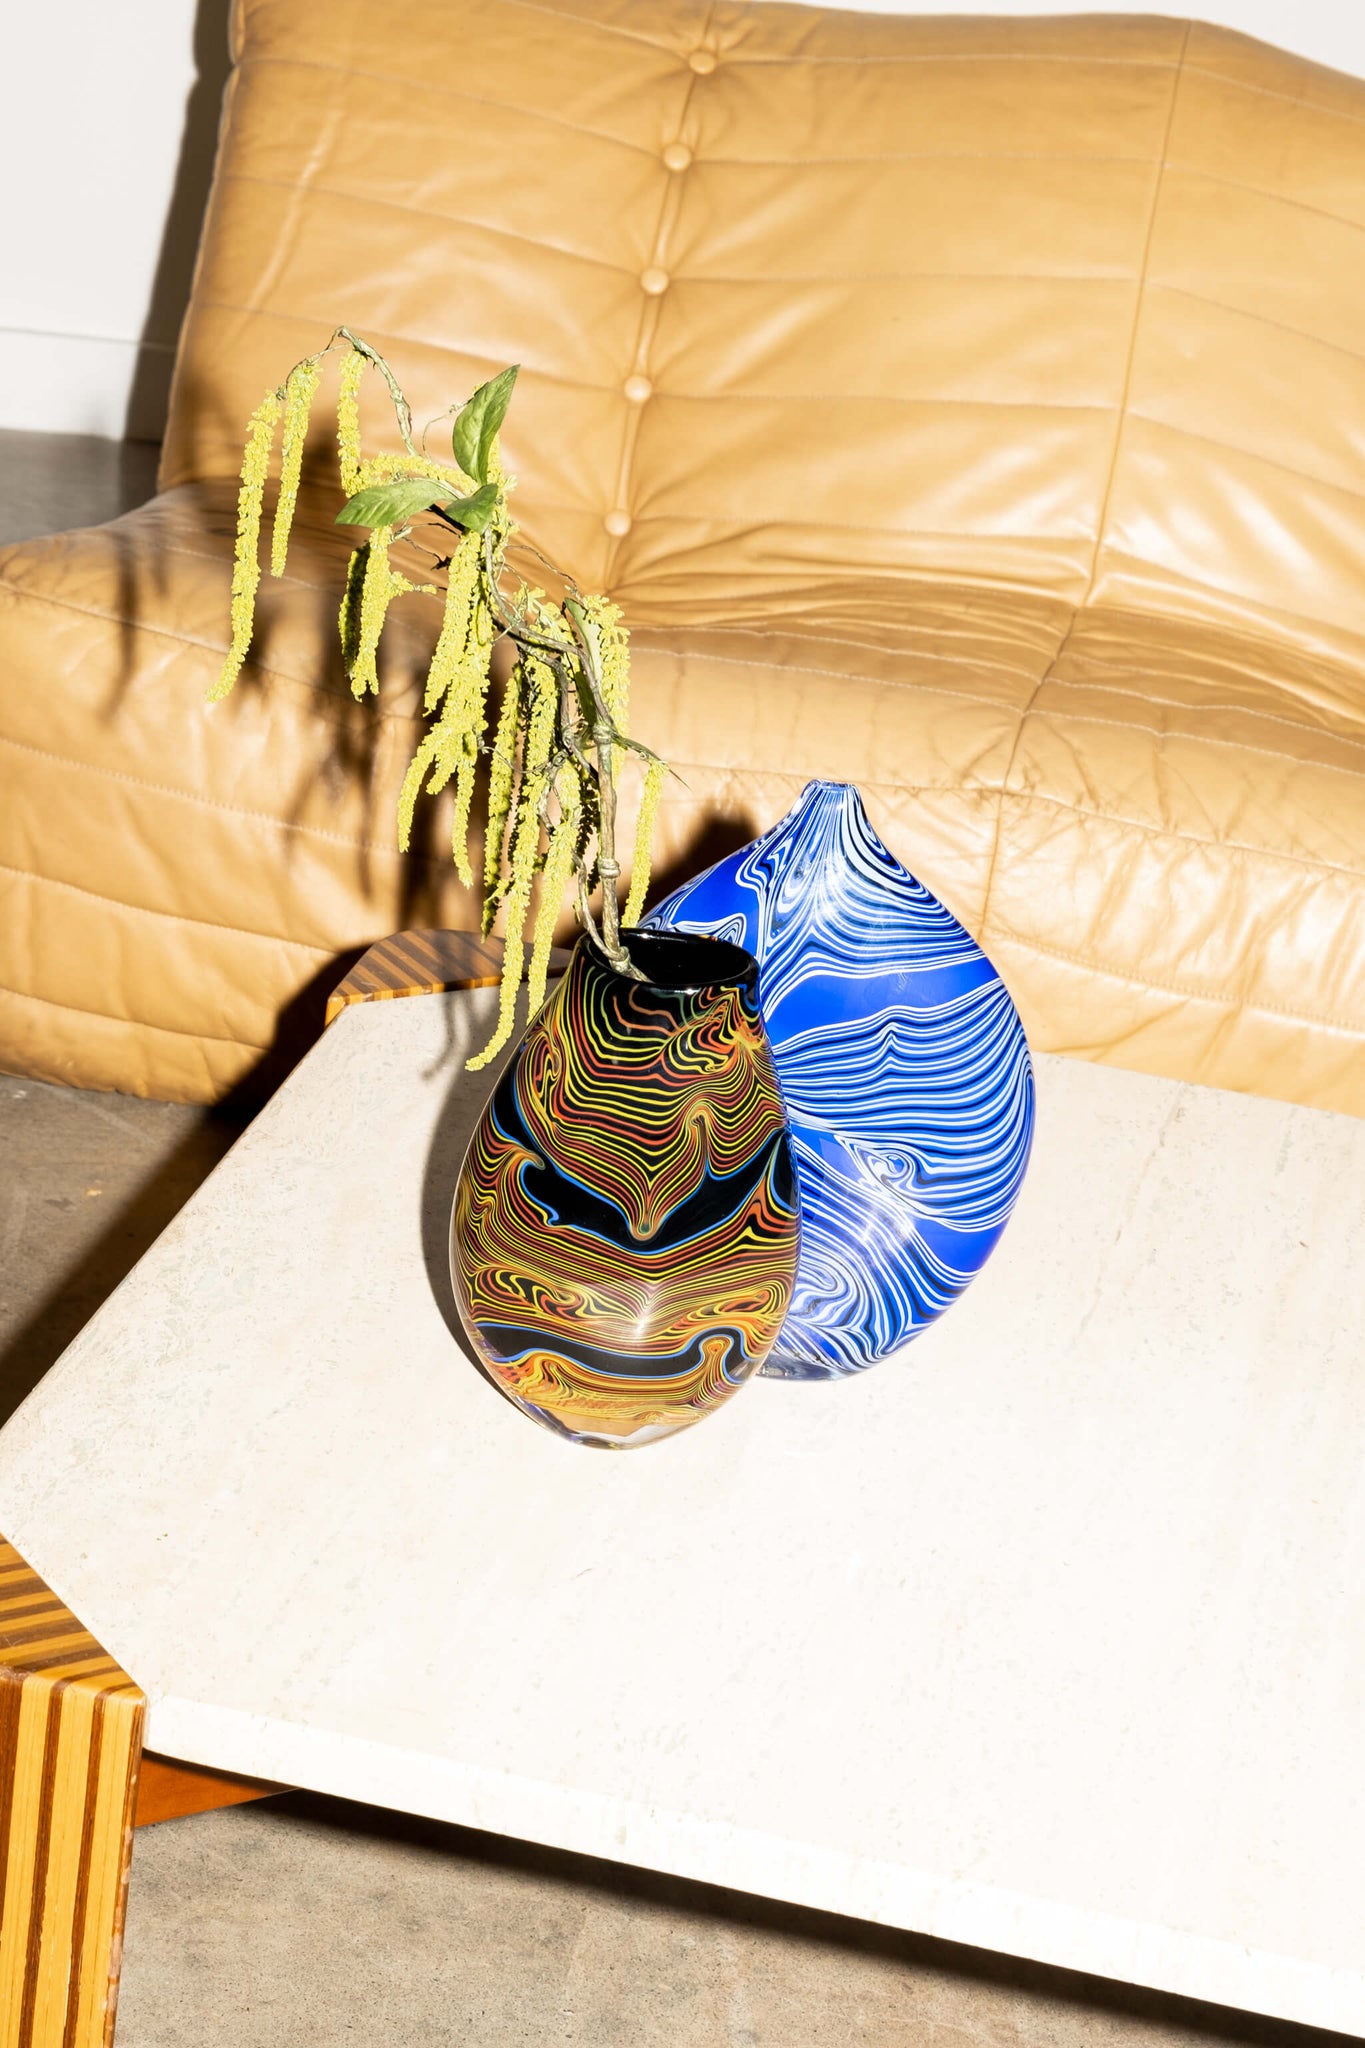 Bonne Choice - Signed Art Glass Vase 2